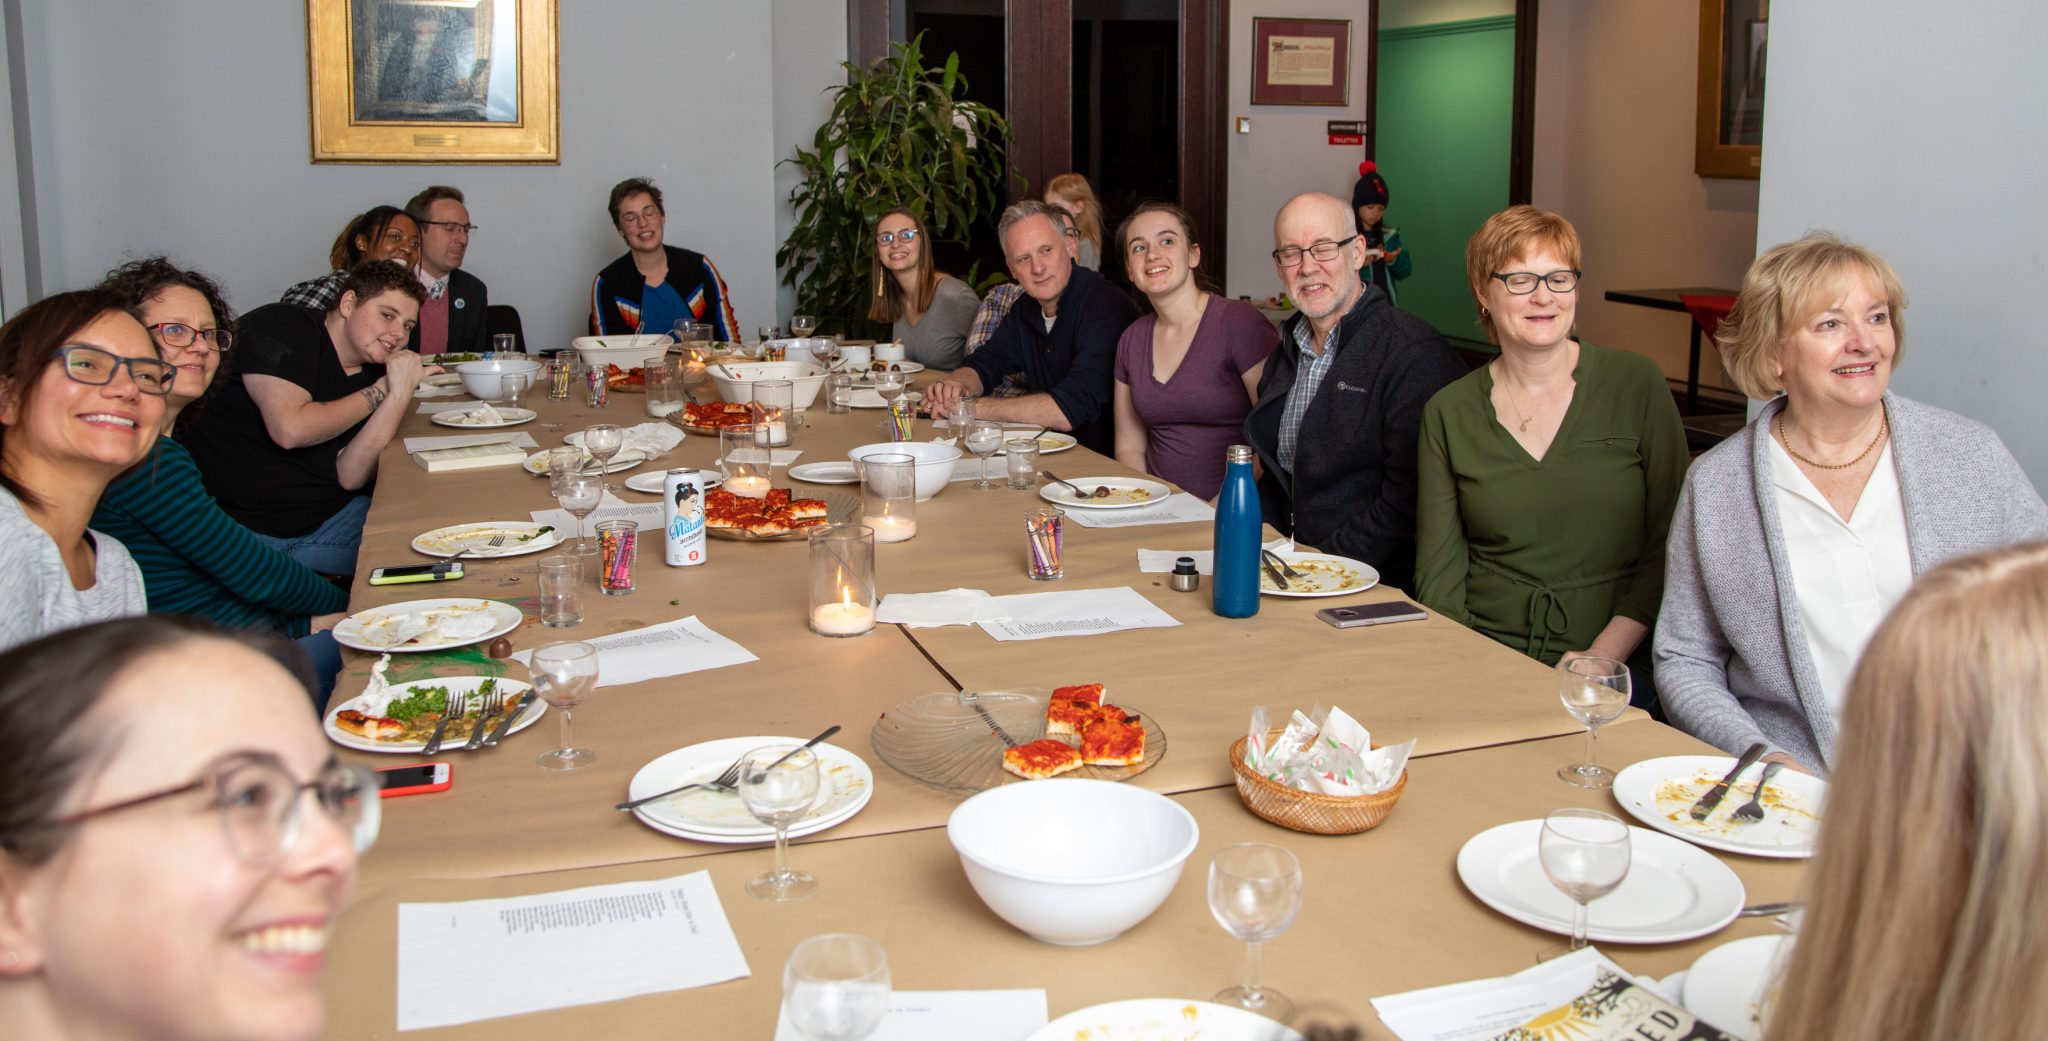 Supper Club: An Exploration of Dinner Church